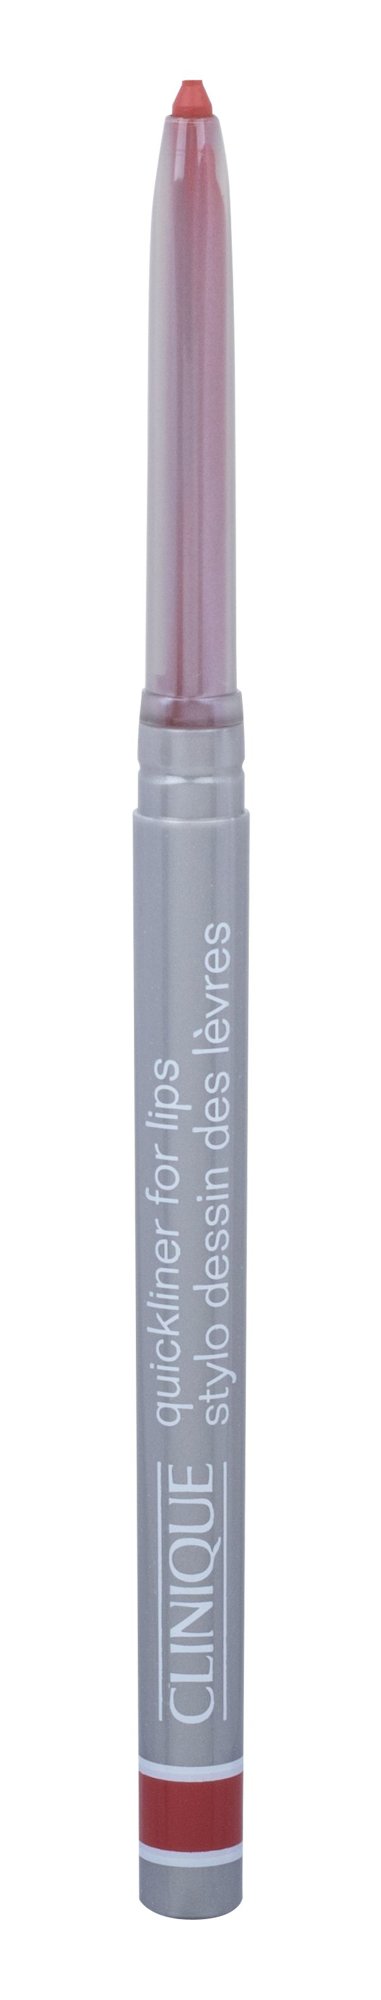 Clinique Quickliner For Lips lūpų pieštukas